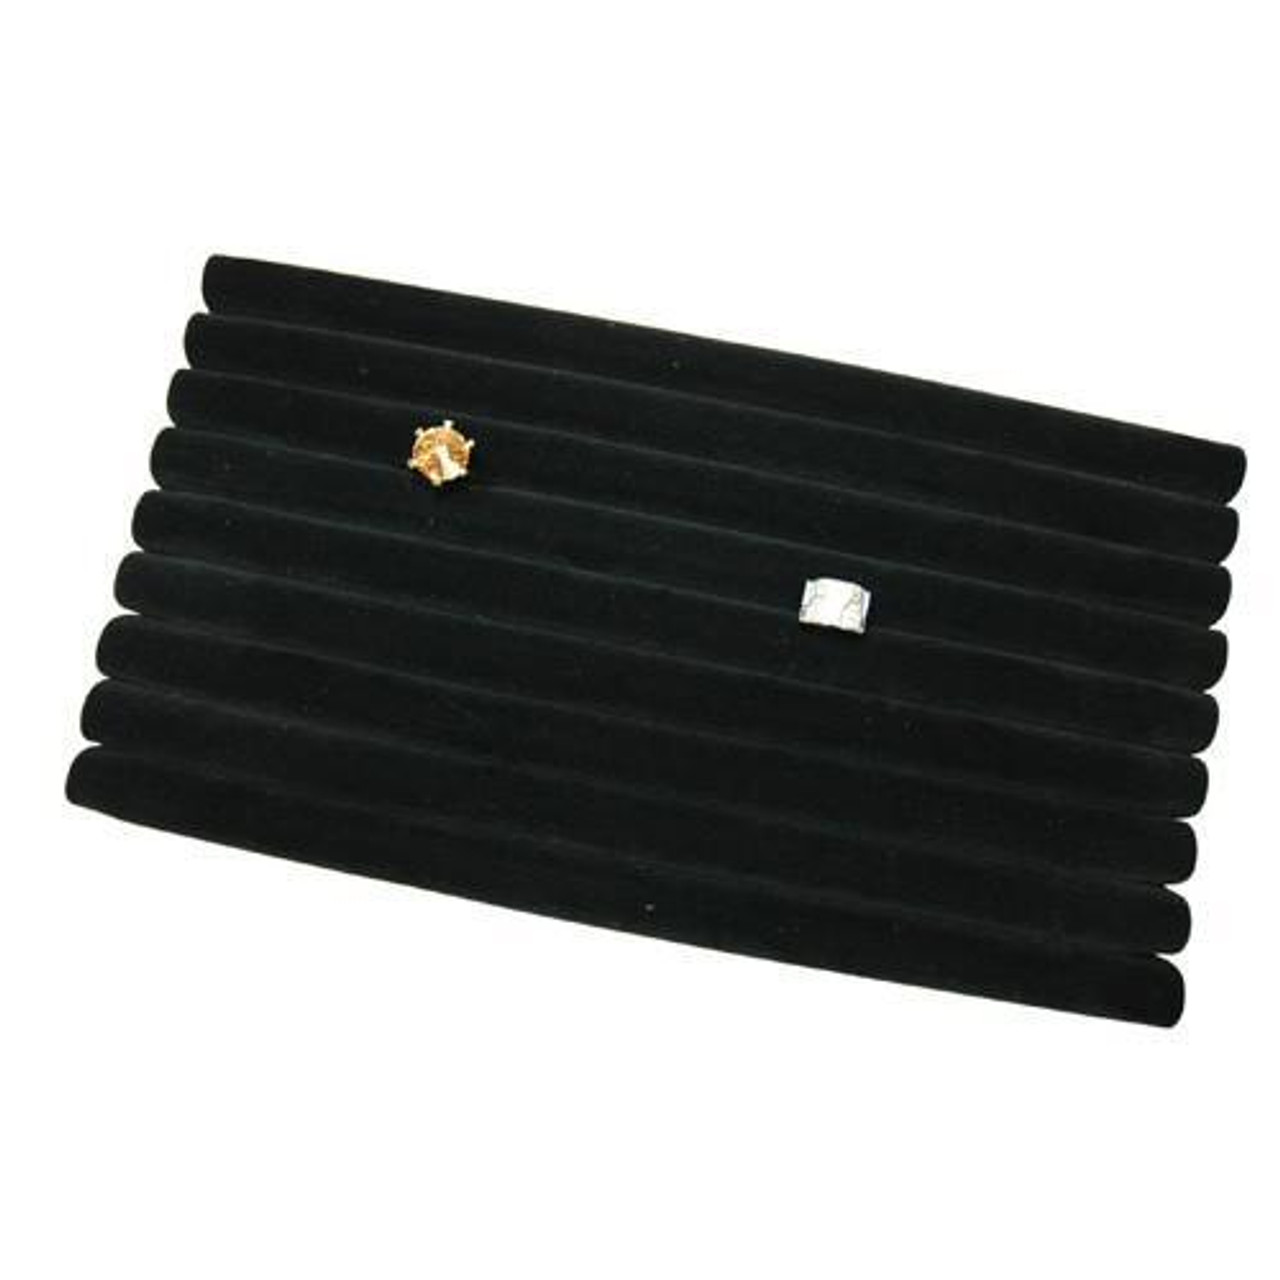 Black Foam 8 Roll Insert for Rings - 14"-1/8" x 7-5/8" fits in Large jewellery trays